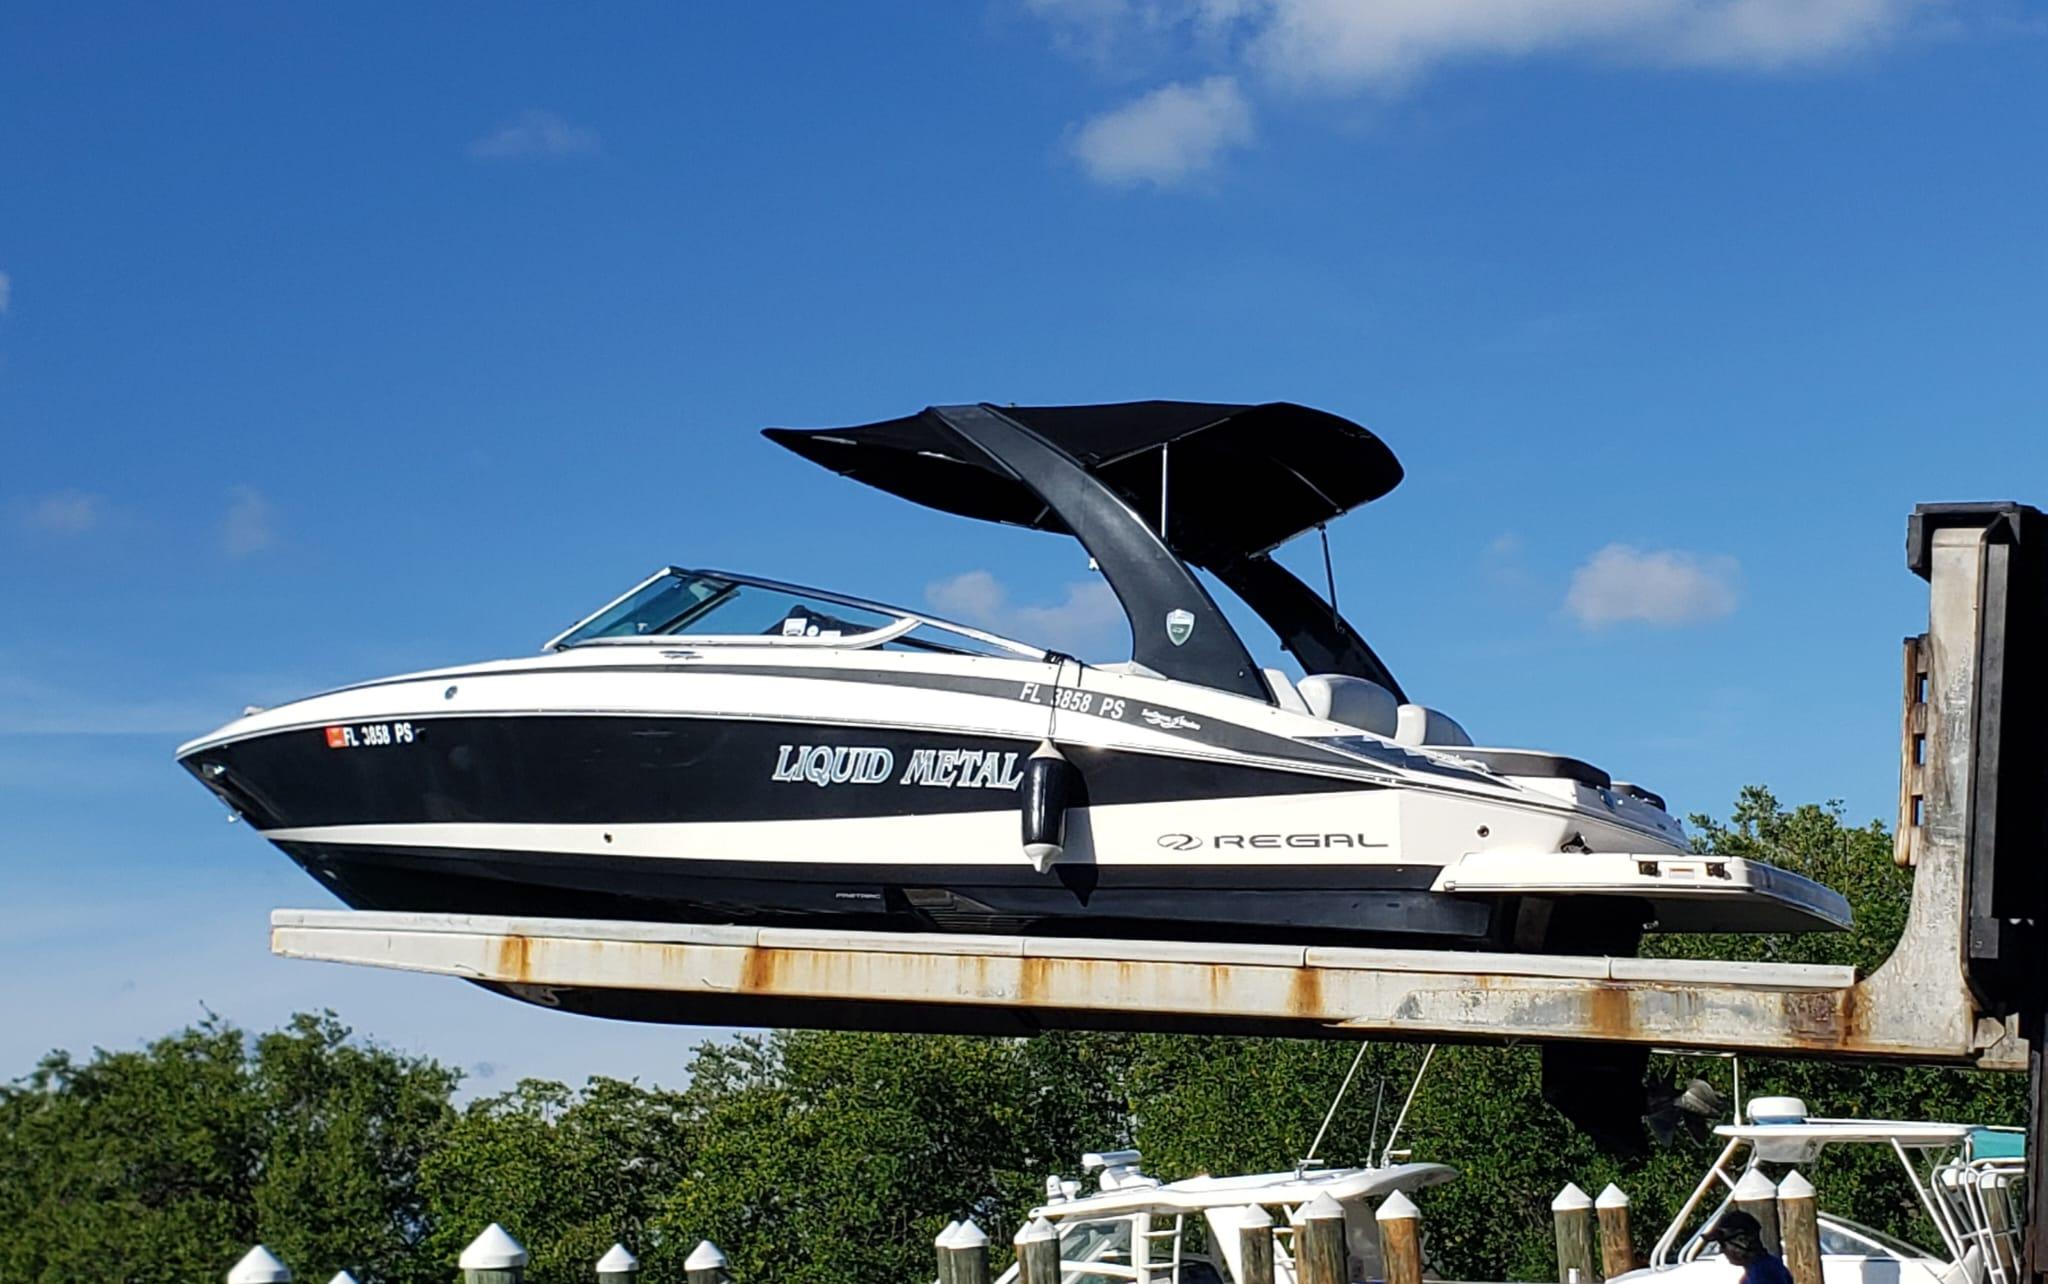 2014 Regal 2500 Bowrider Bowrider for sale - YachtWorld